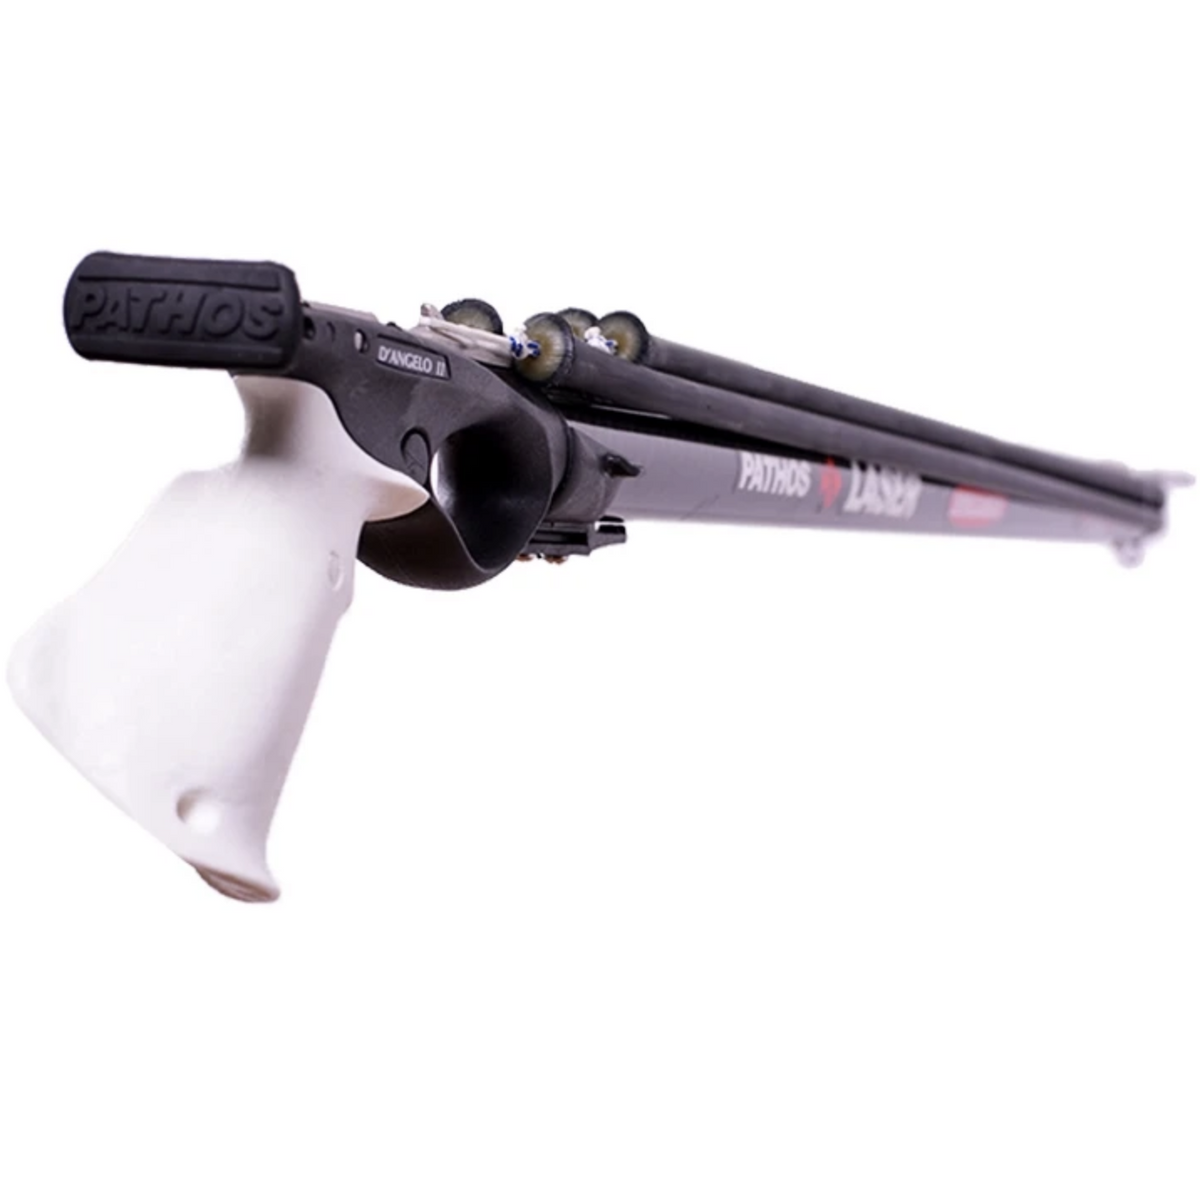 Pathos - Roller Speargun muzzle - Speargun Accessories